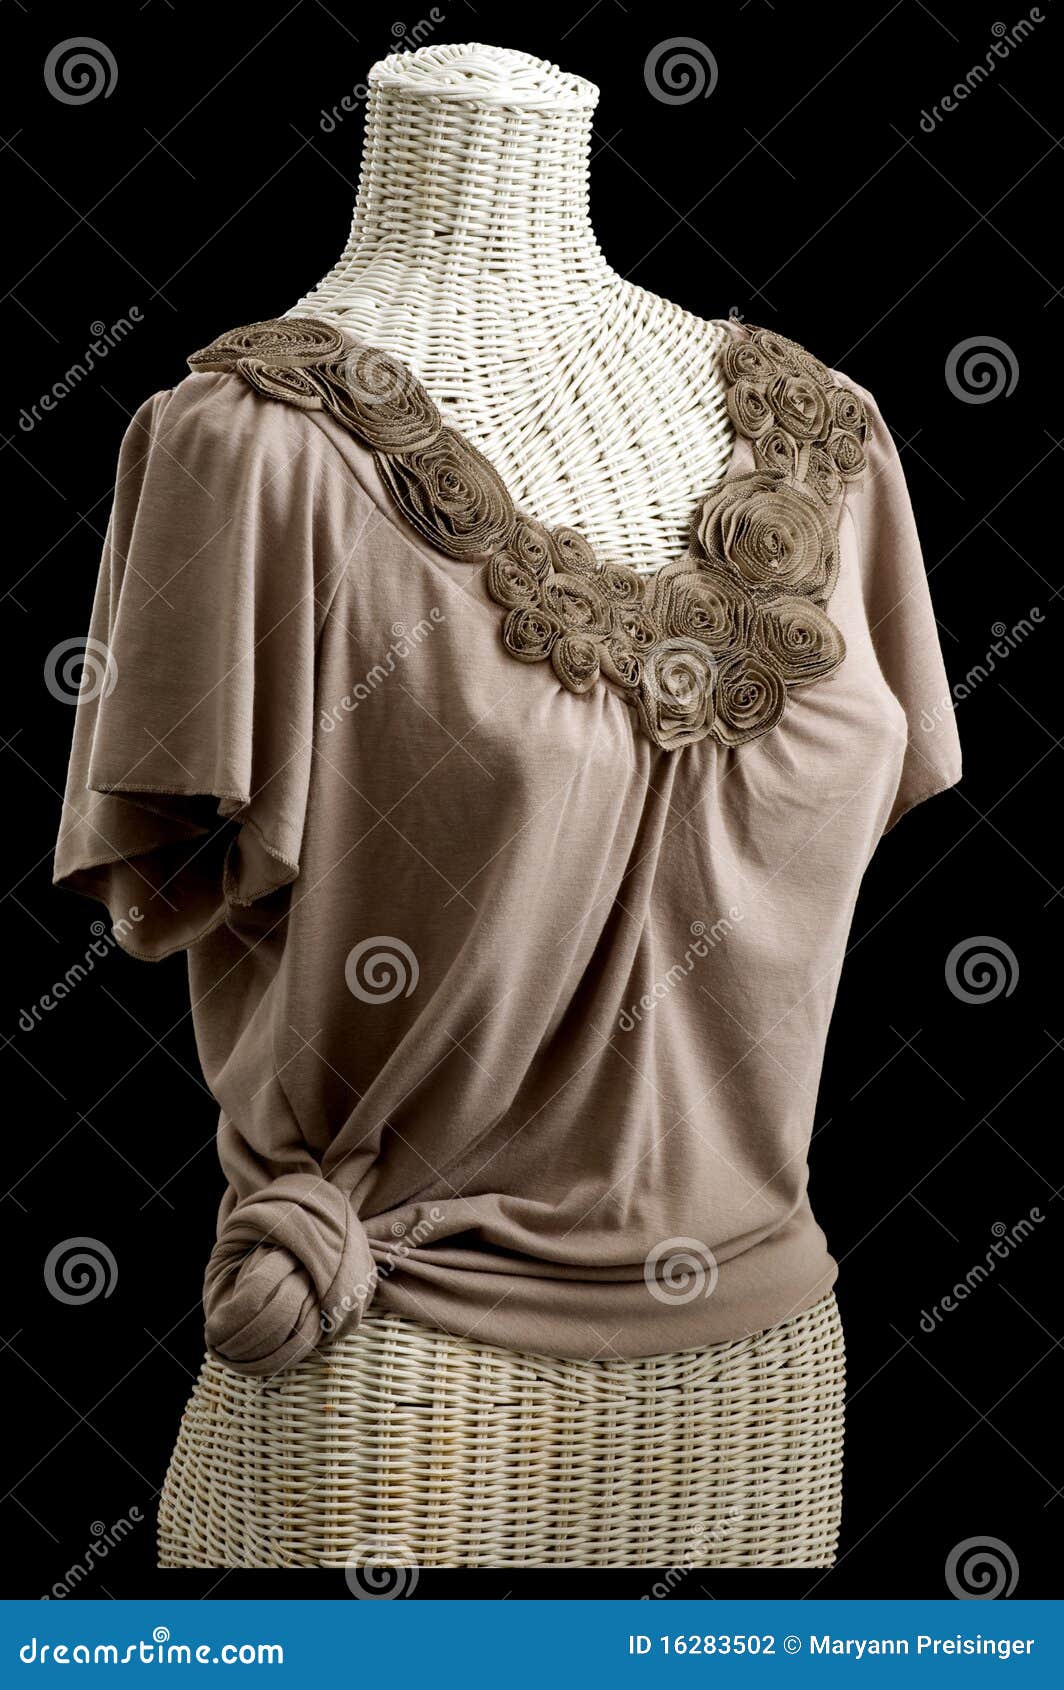 sculpted flower neckline blouse knotted waist